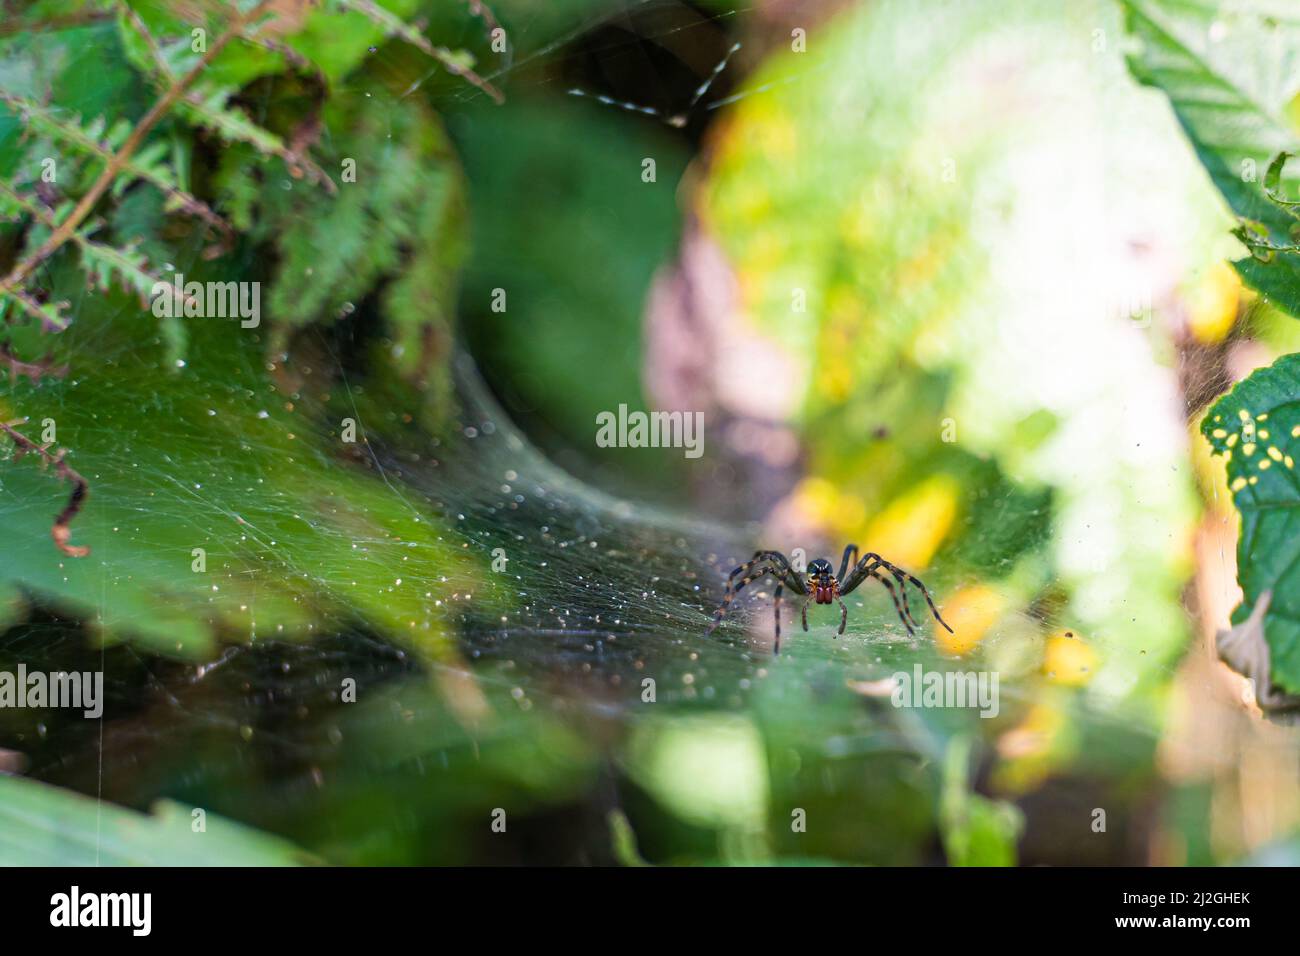 Unbekannte Spinne ( Aglaoctenus Lagotis ? ) Im regenwald des amazonas in puerto Nariño, Kolumbien Stockfoto